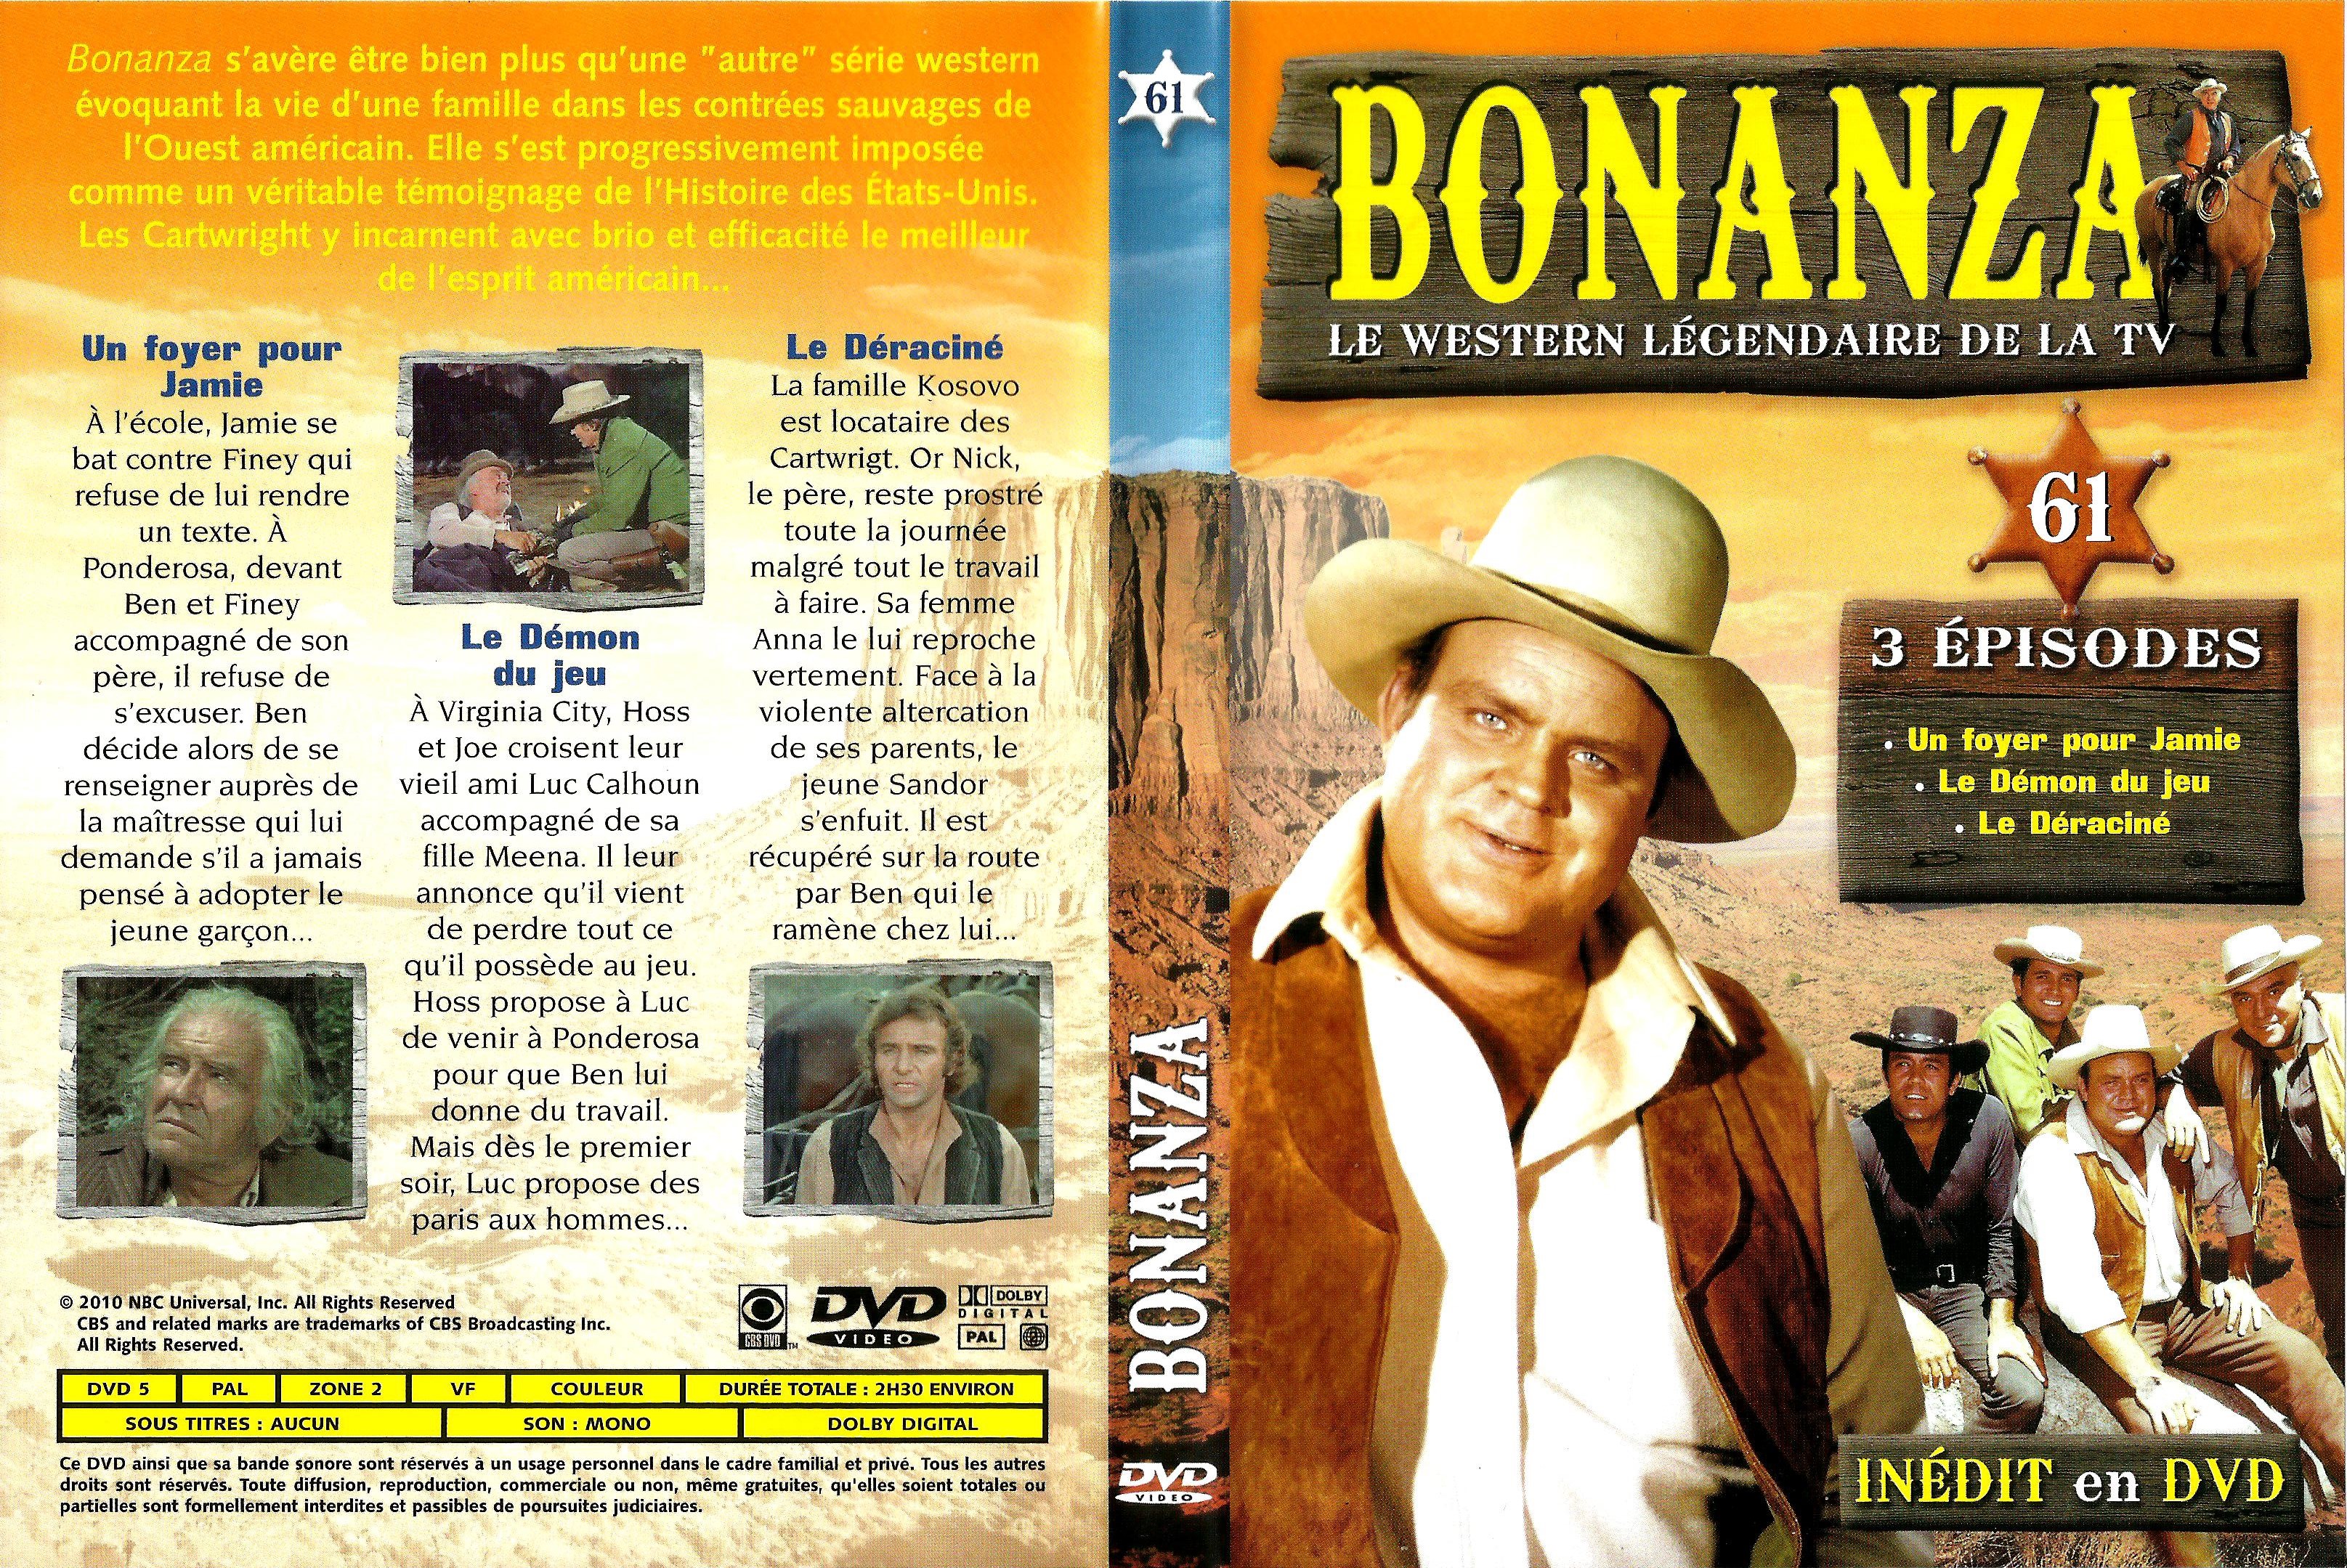 Jaquette DVD Bonanza vol 61